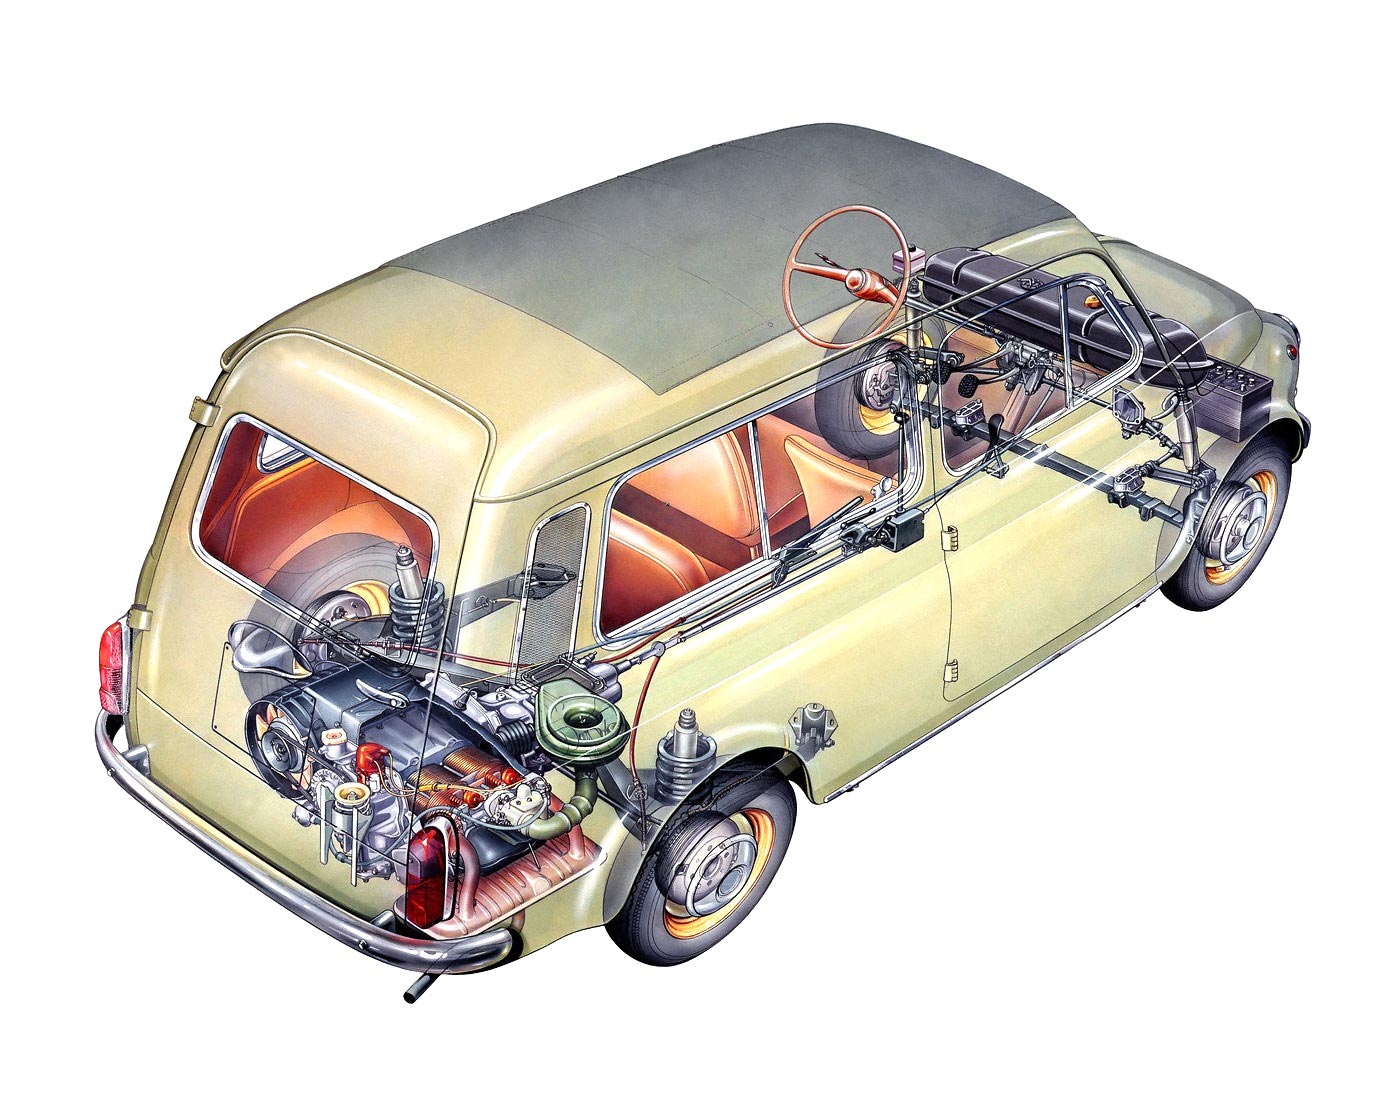 Fiat 500 Giardiniera cutaway drawing